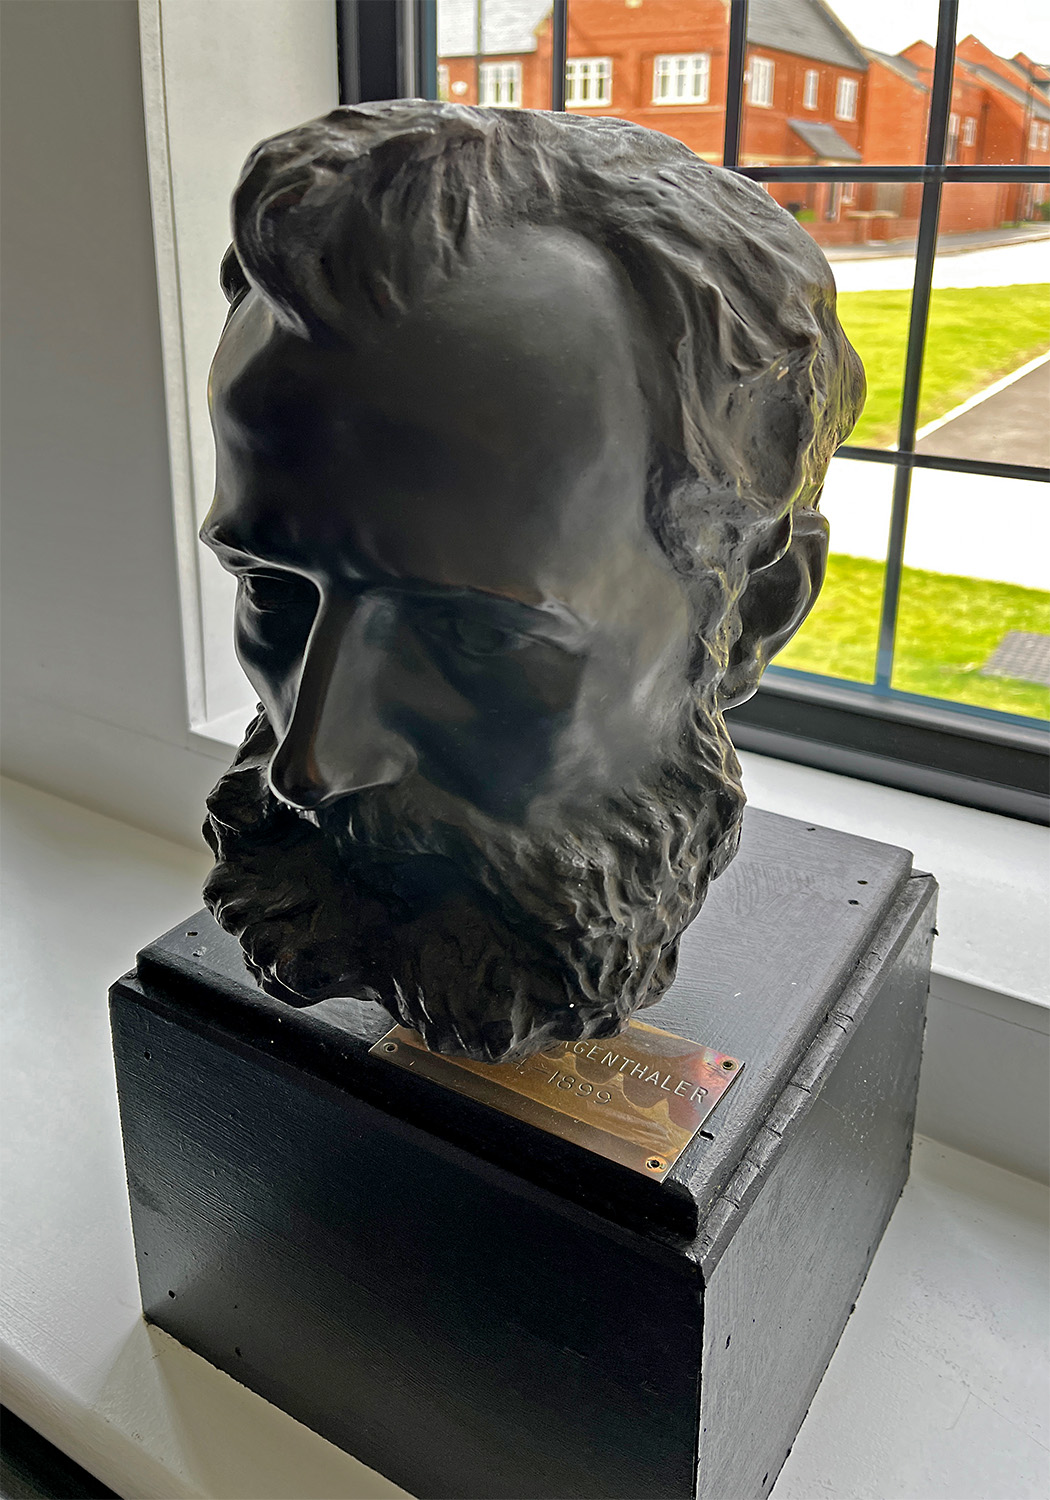 A small statue of Ottmar Mergenthaler hangs out on a window sill.